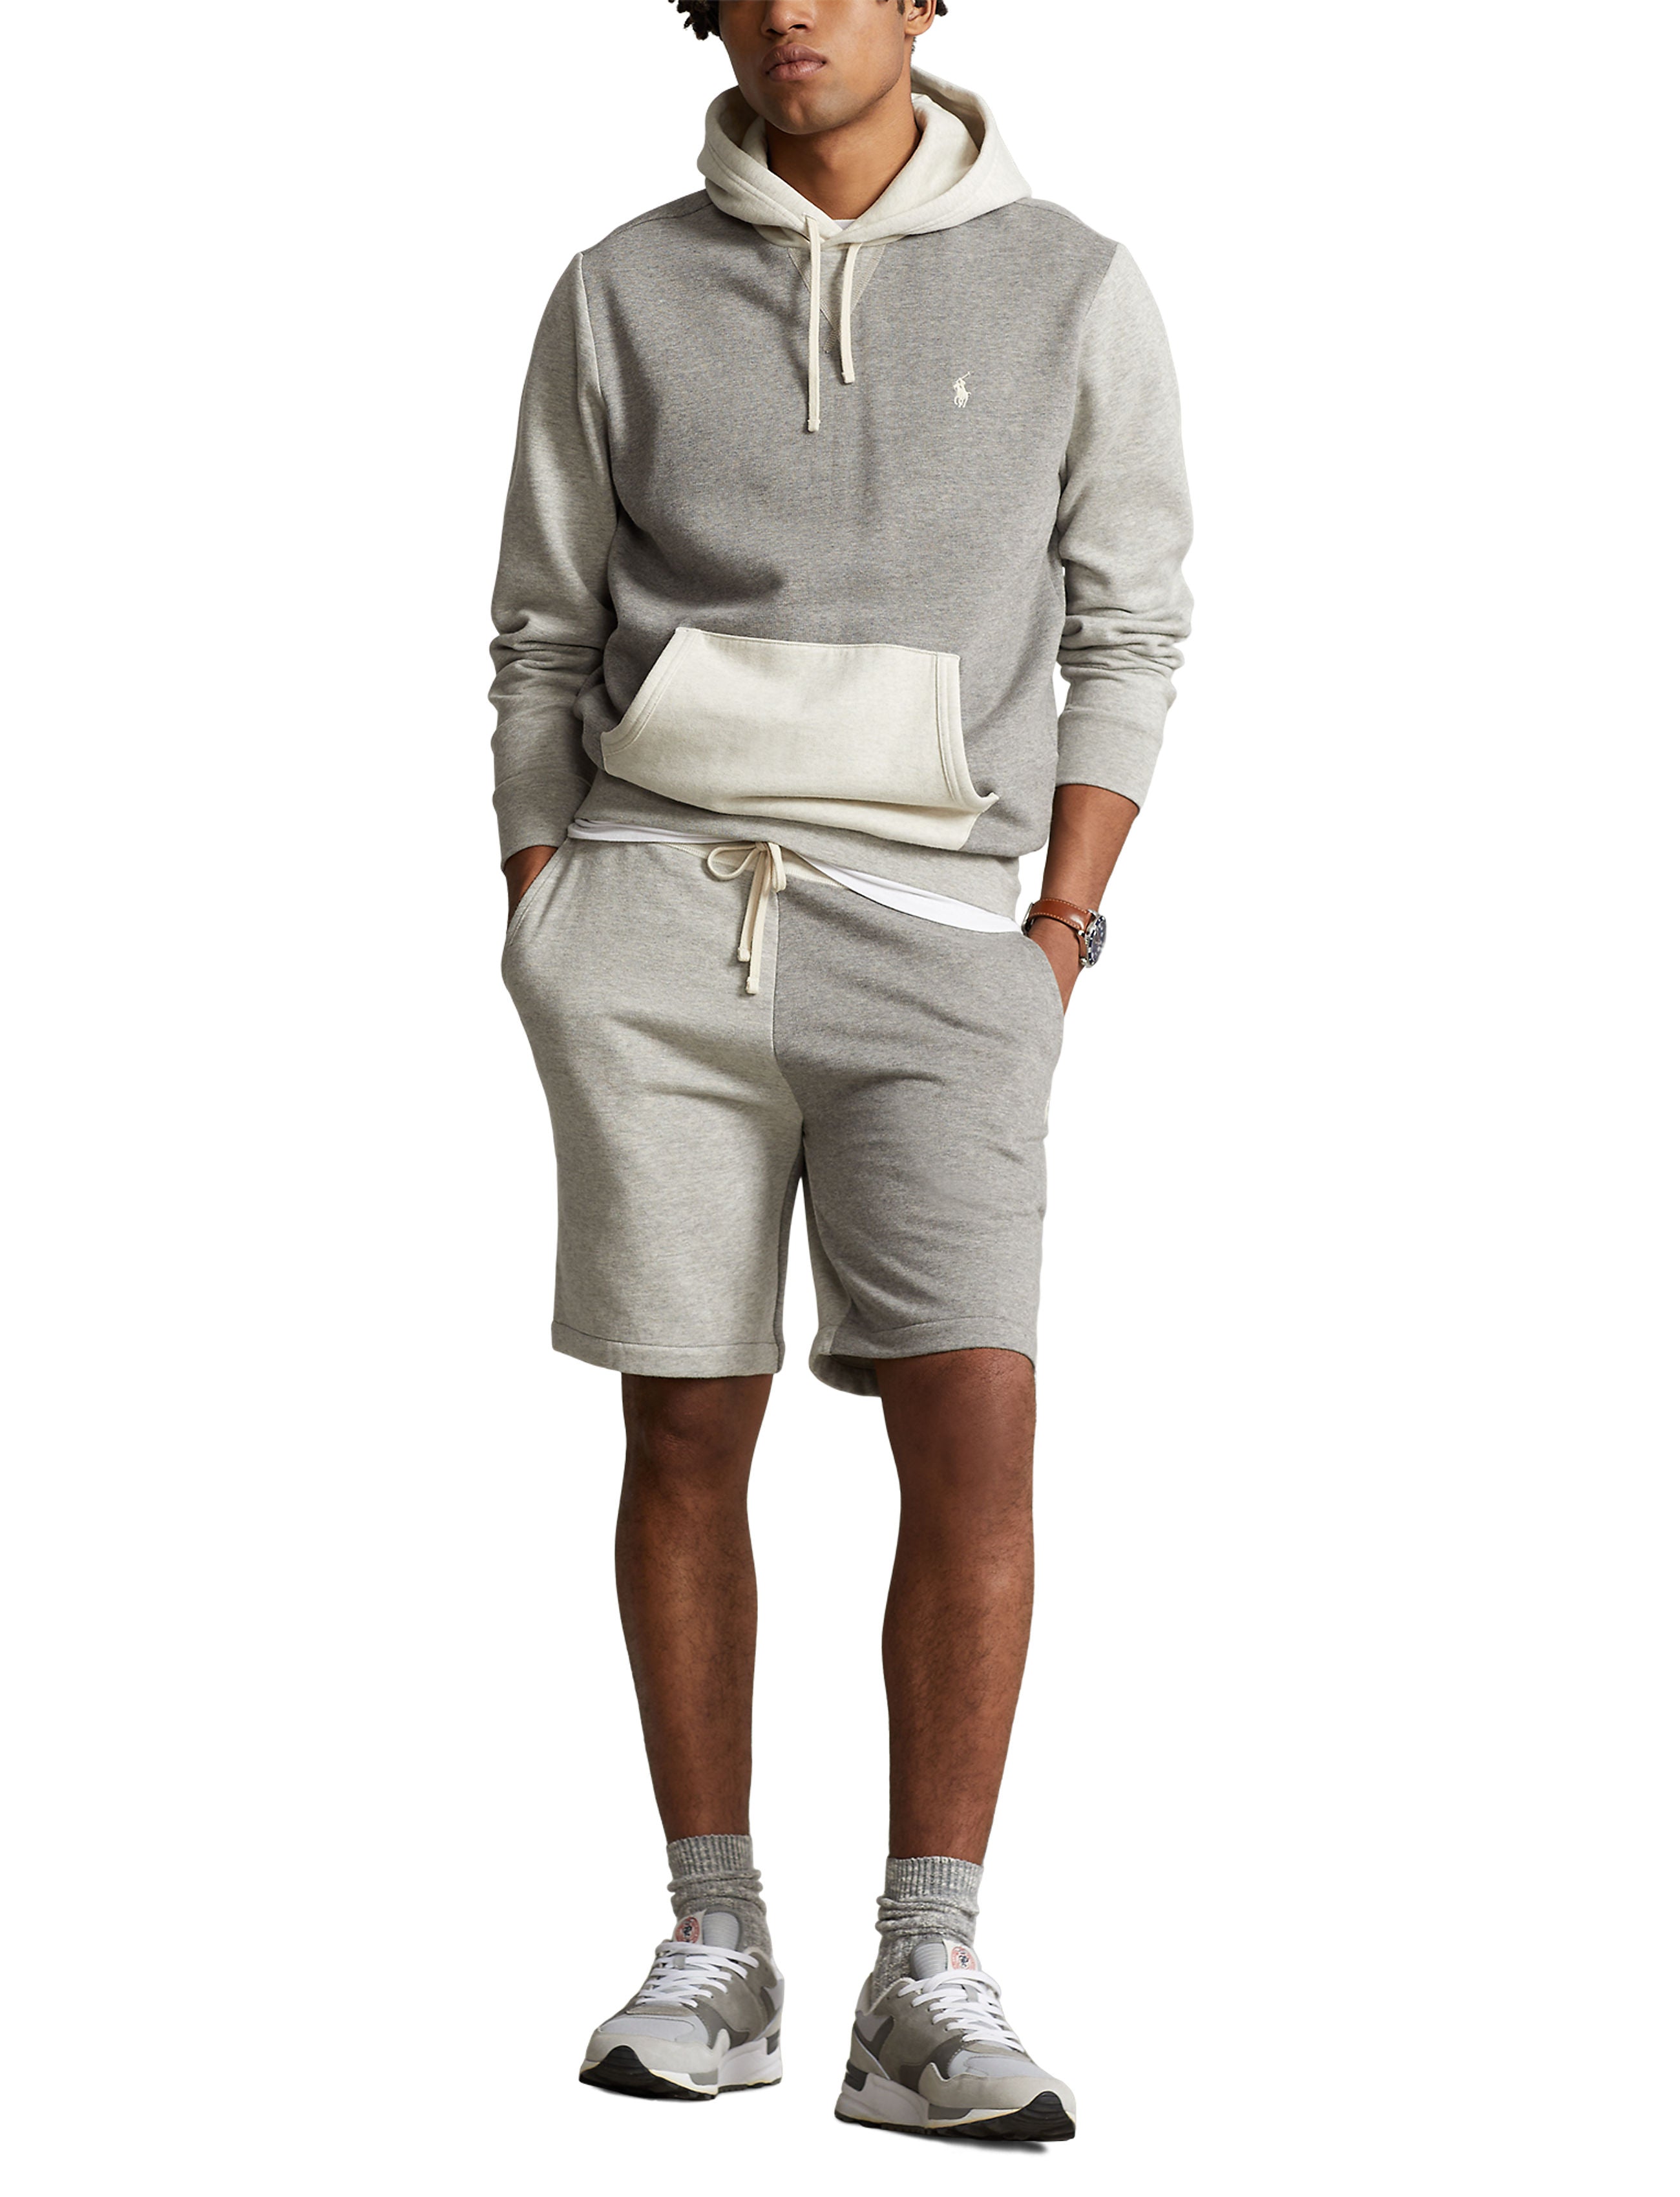 Polo Ralph Lauren Shorts - 9.5 Inch Ralph Lauren Fleece Short